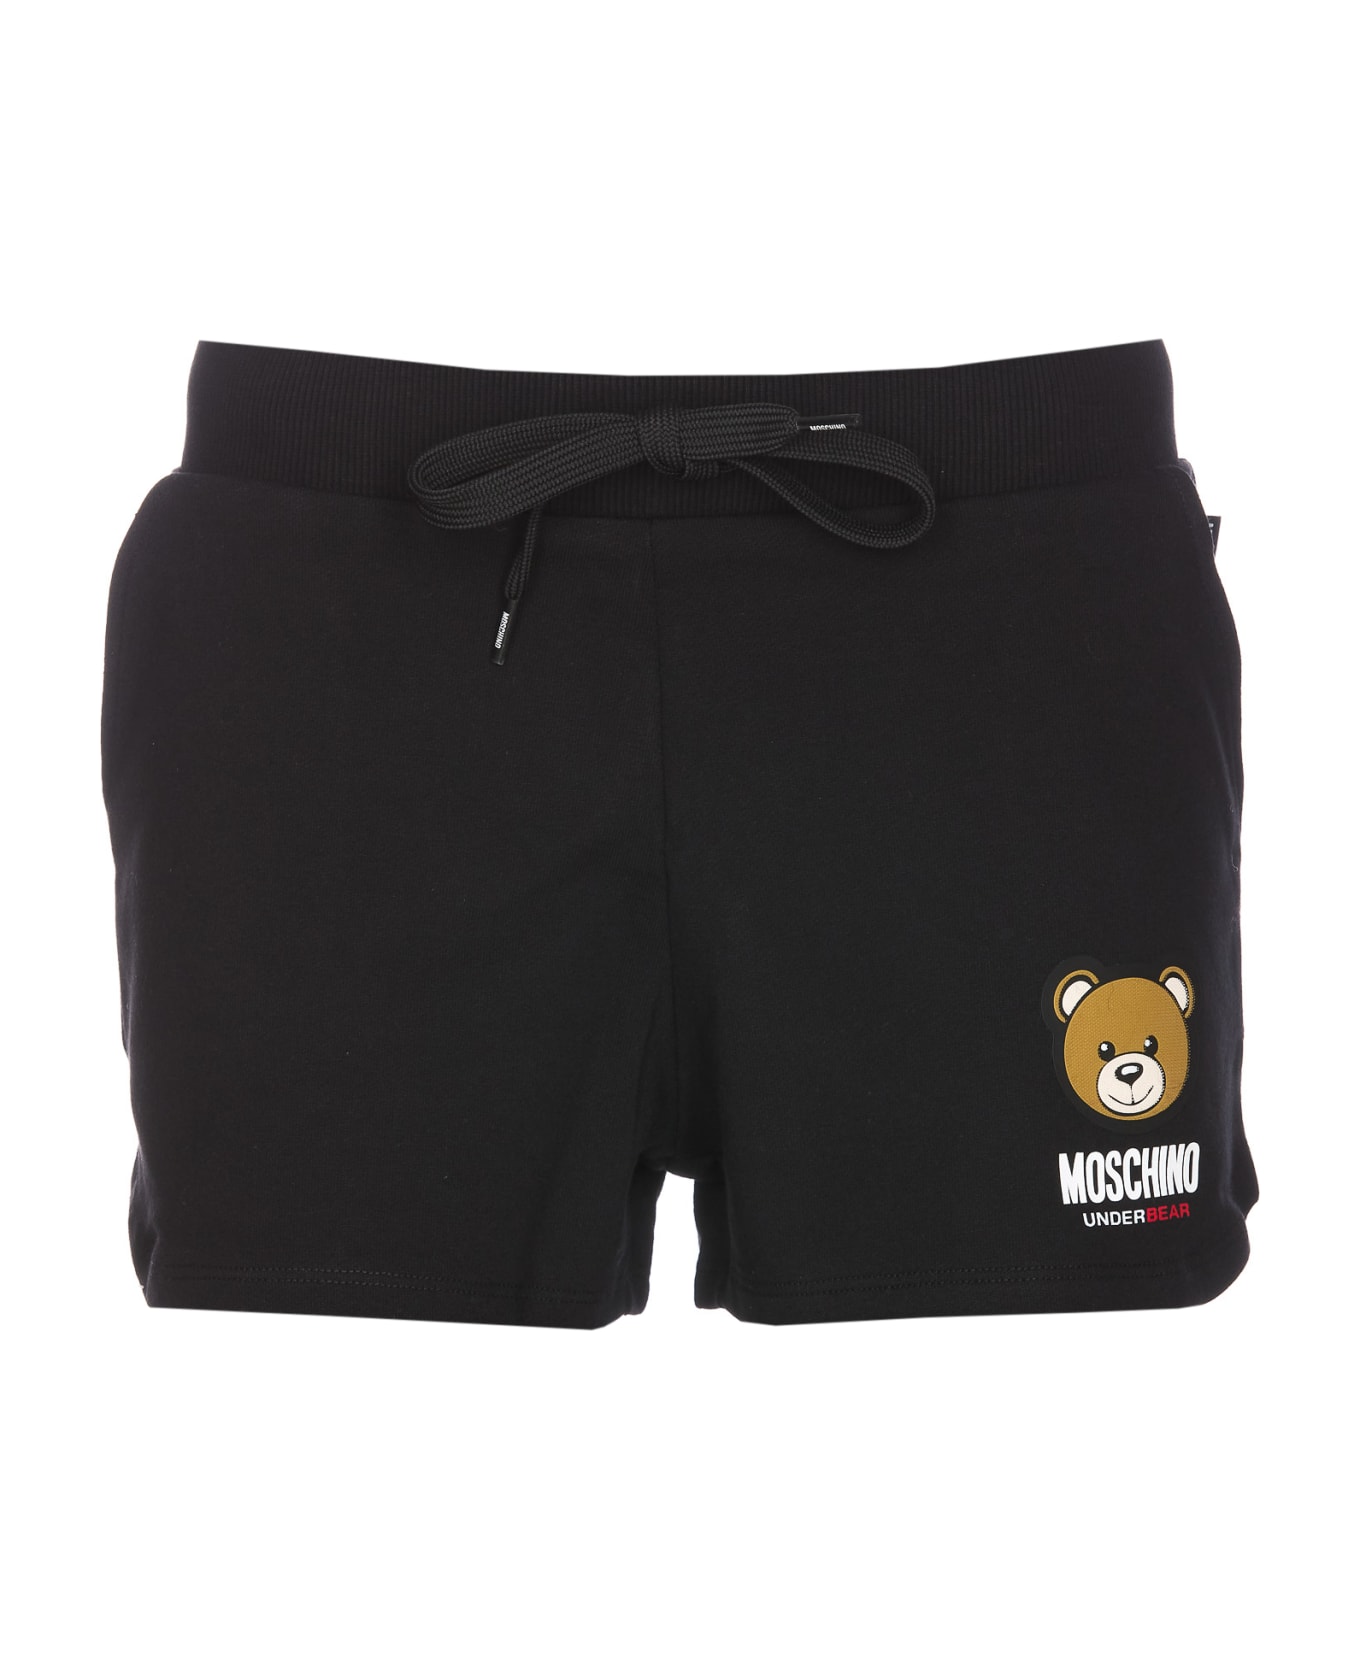 Moschino Underbear Shorts - Black ショートパンツ